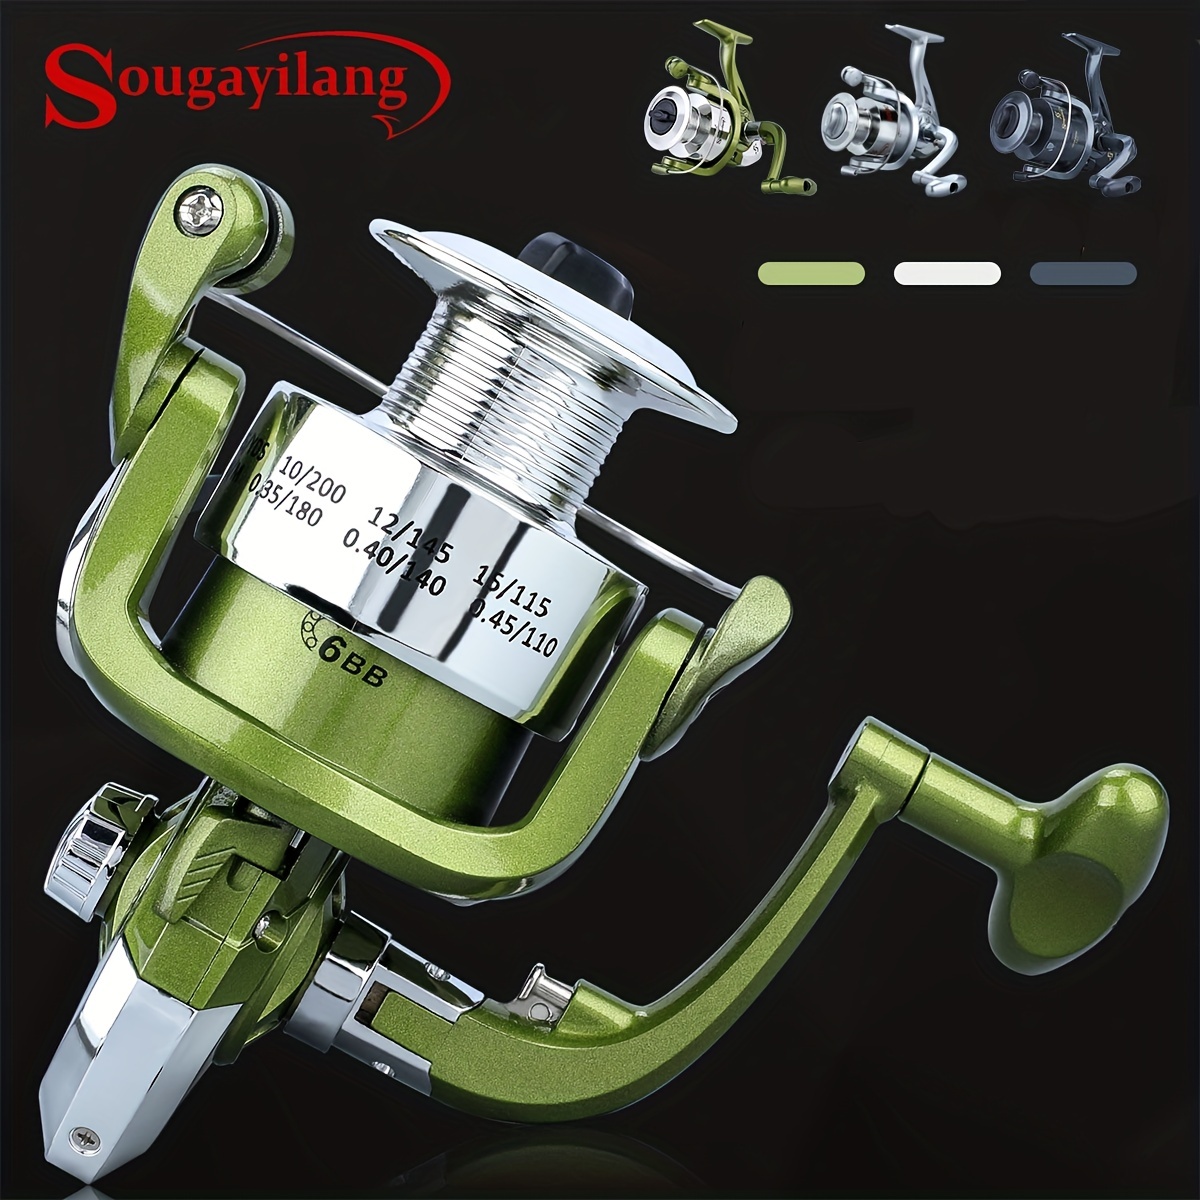 Sougayilang 1000-4000 Series 5.2: 1 Gear Ratio Spinning Reel For  Freshwater, Fishing Gear